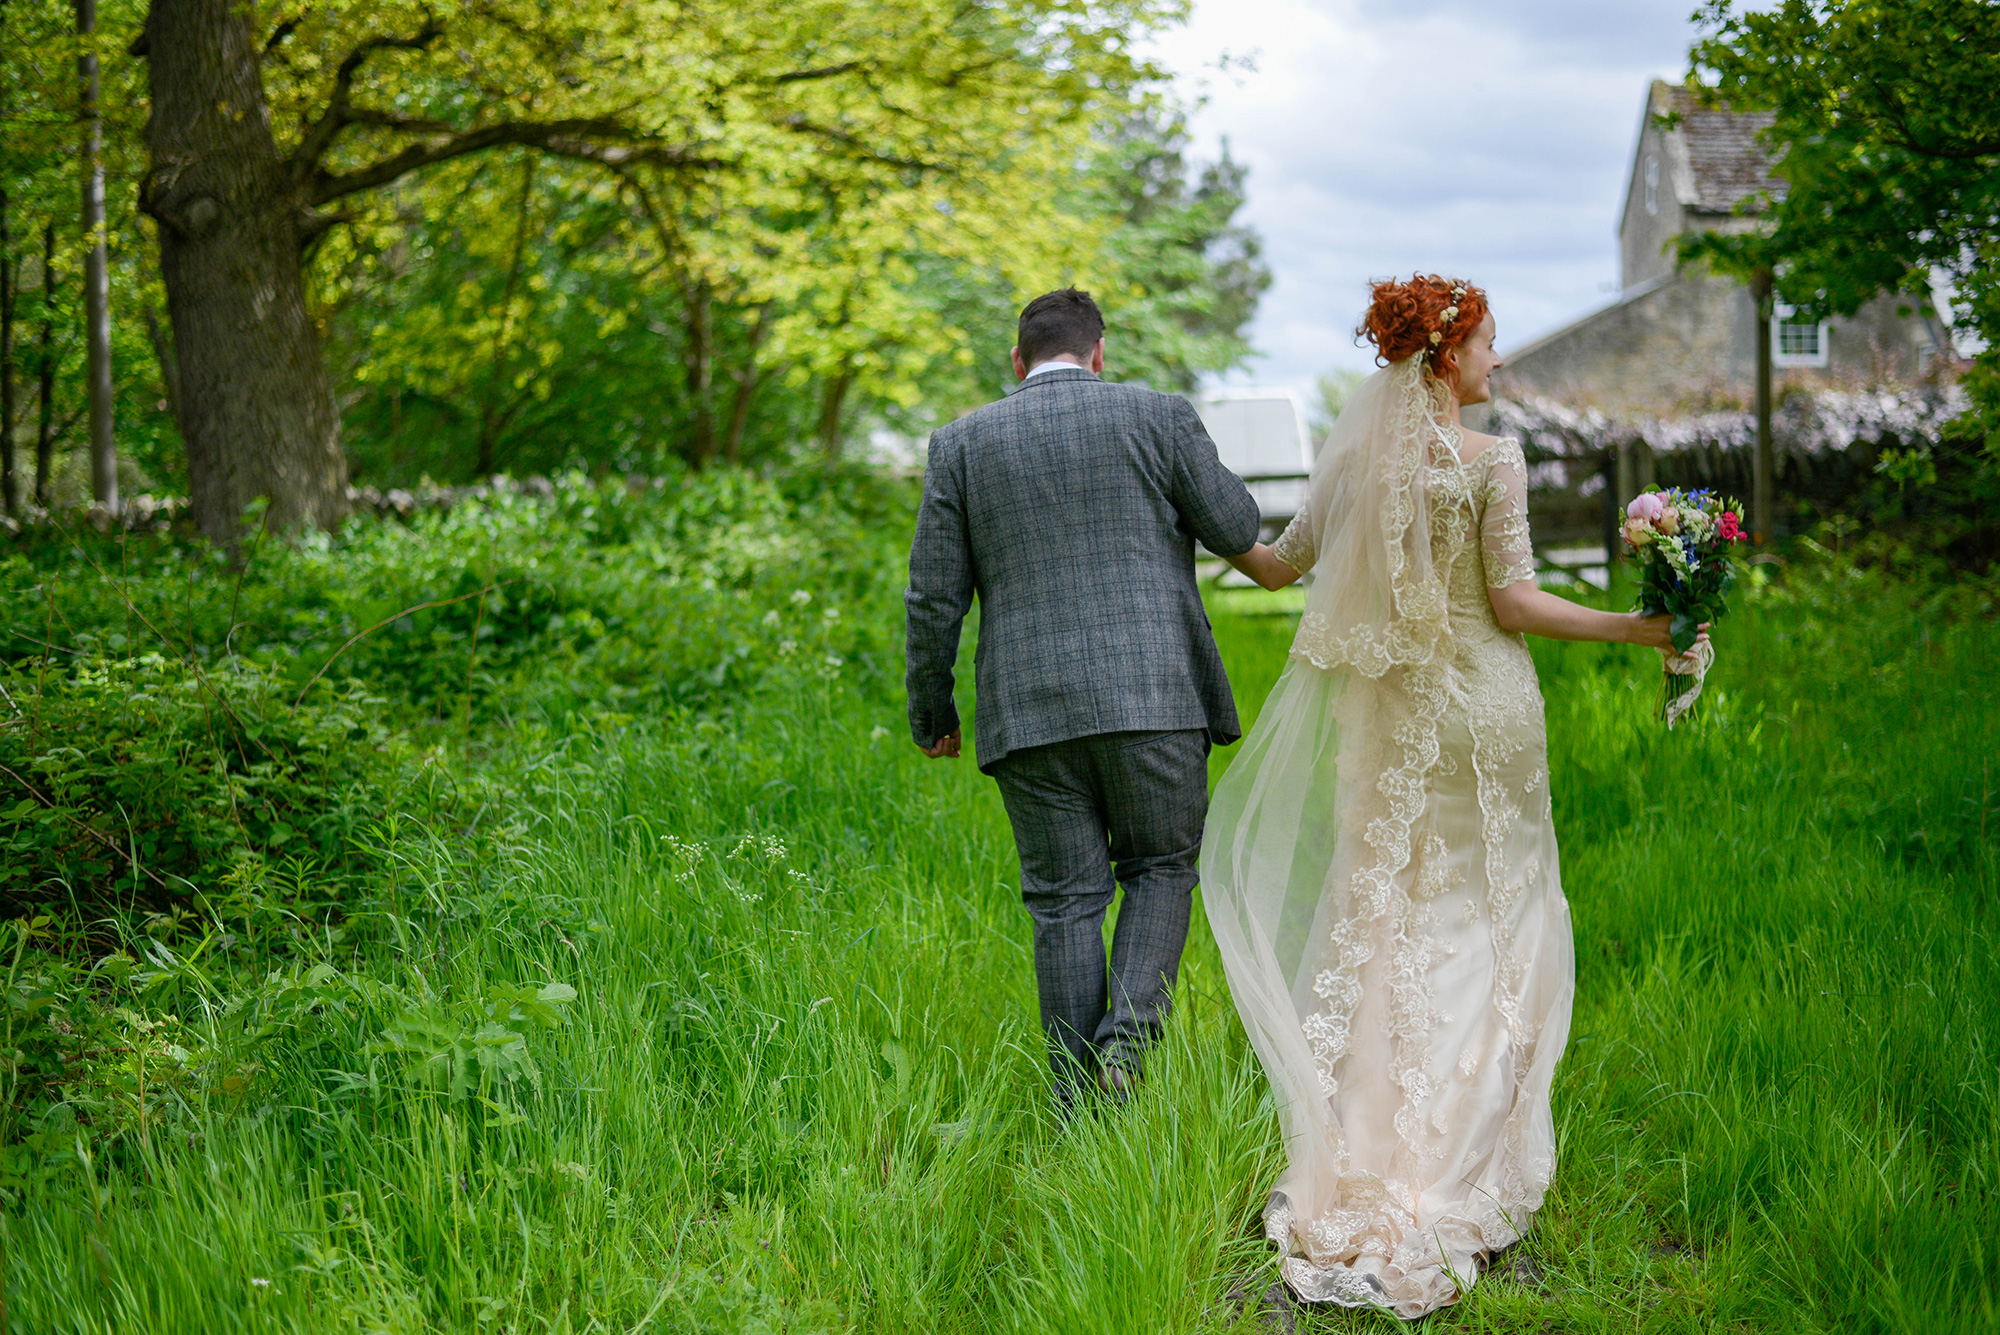 Heather_Darrell_Homemade-Rustic-Wedding_Kimberley-Waterson-Fine-Art-Photography_024